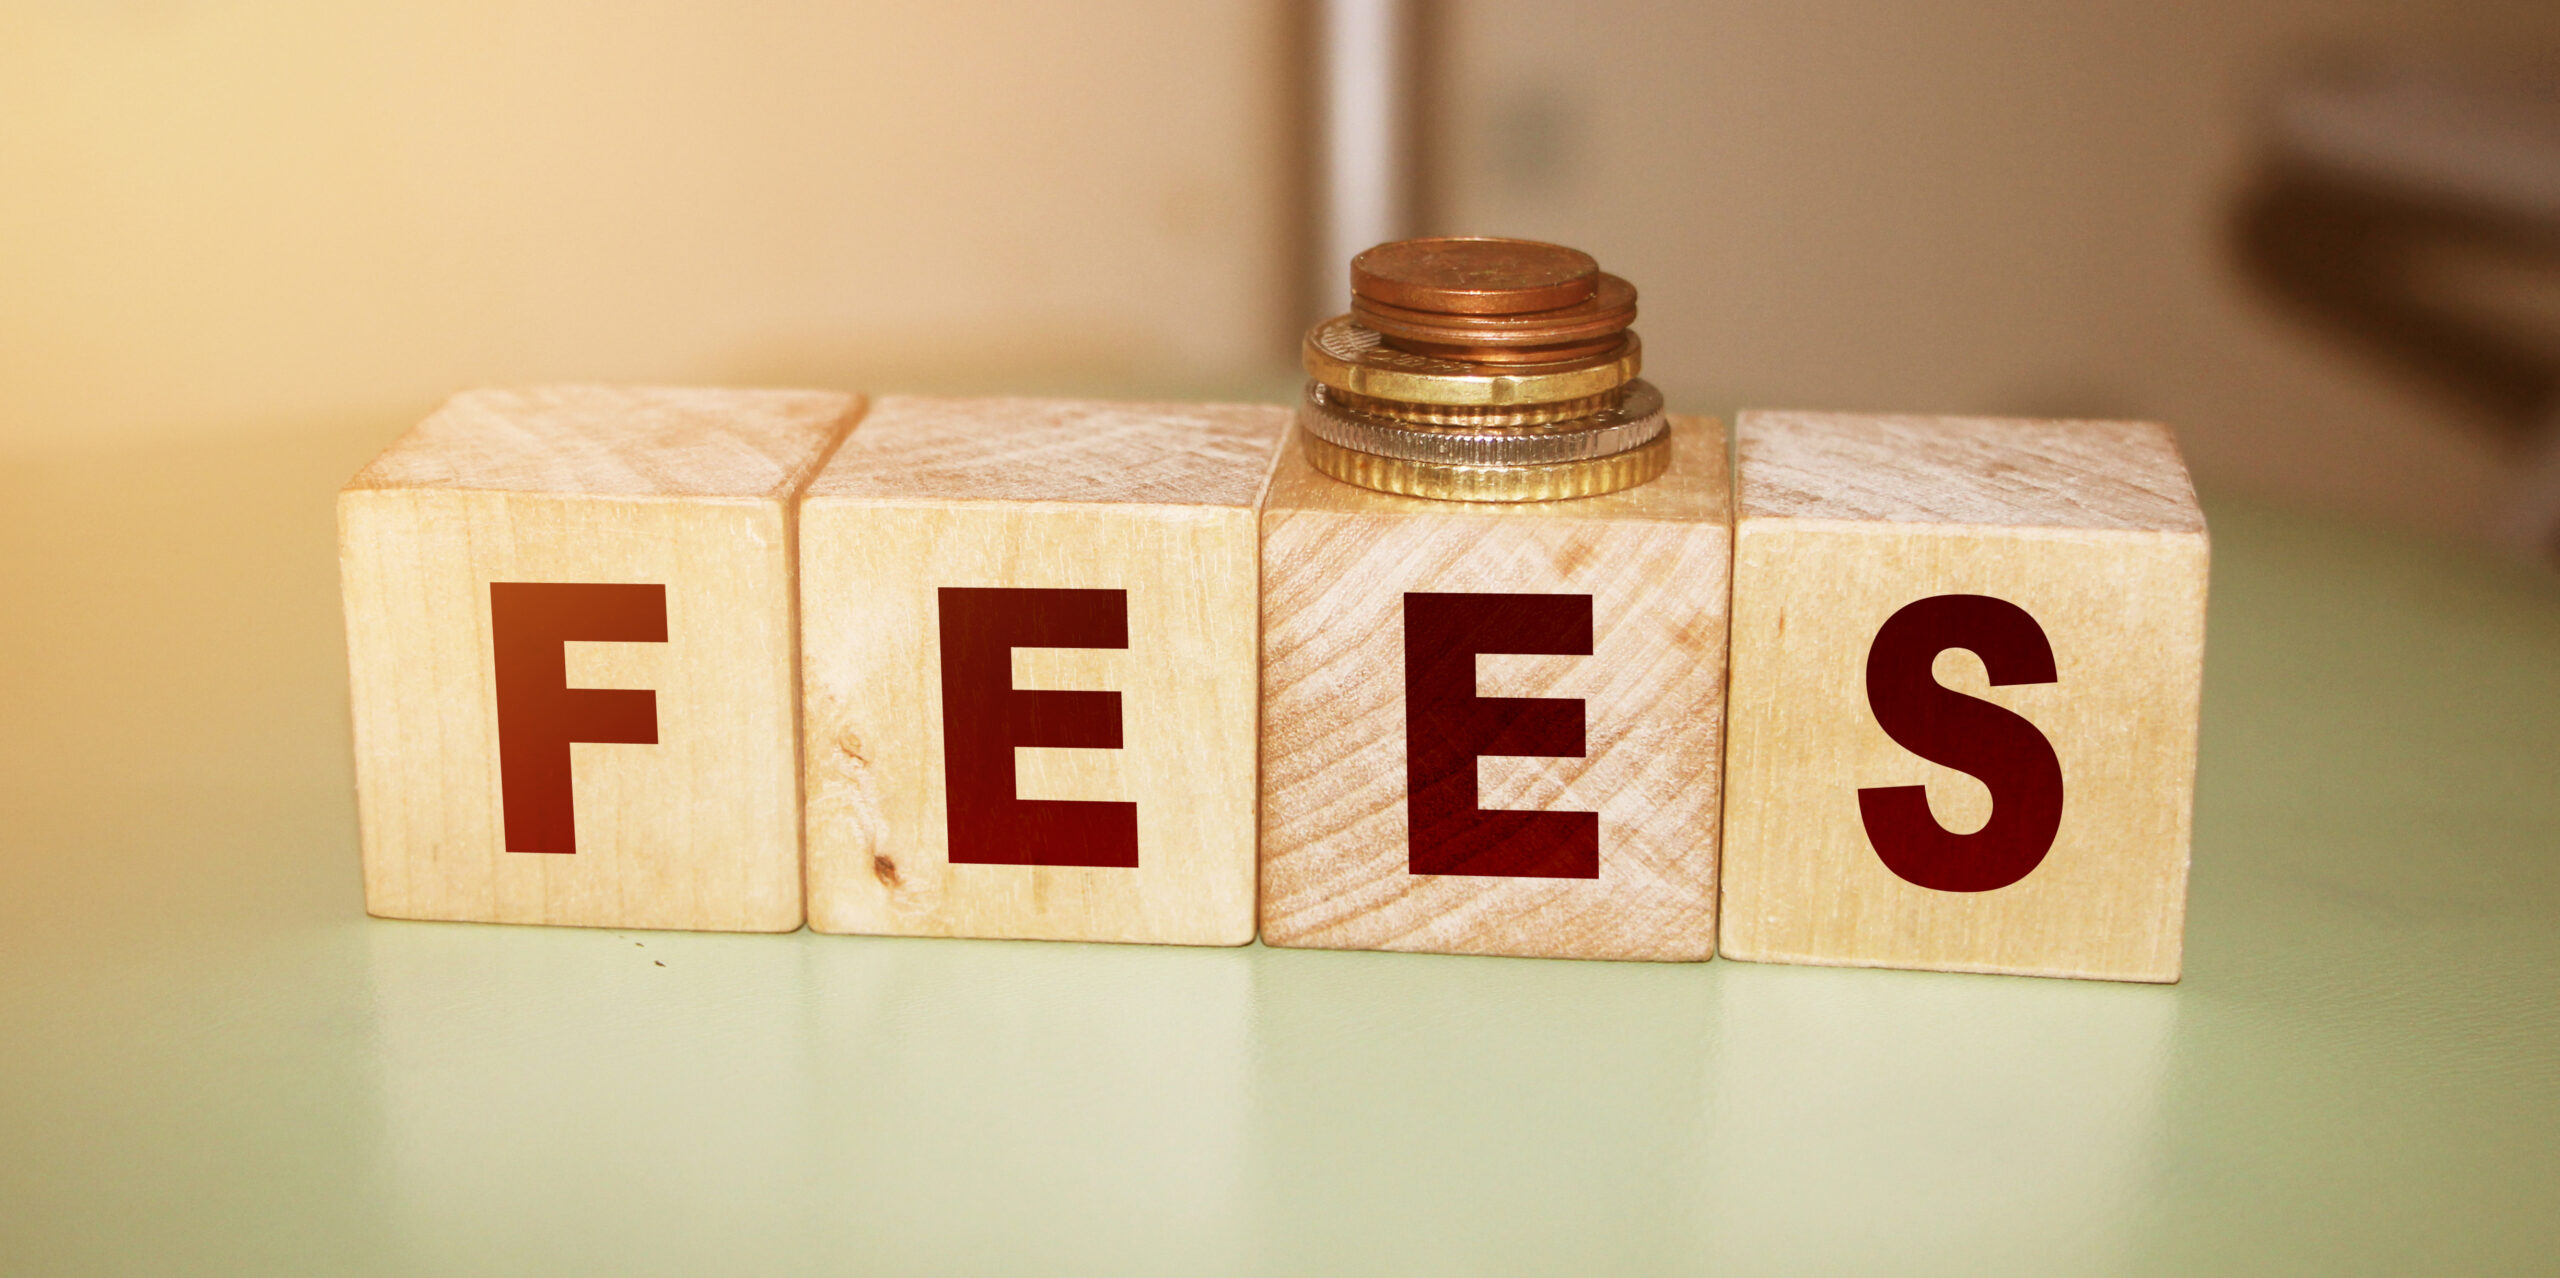 Short Term Rental Fees: why so many?